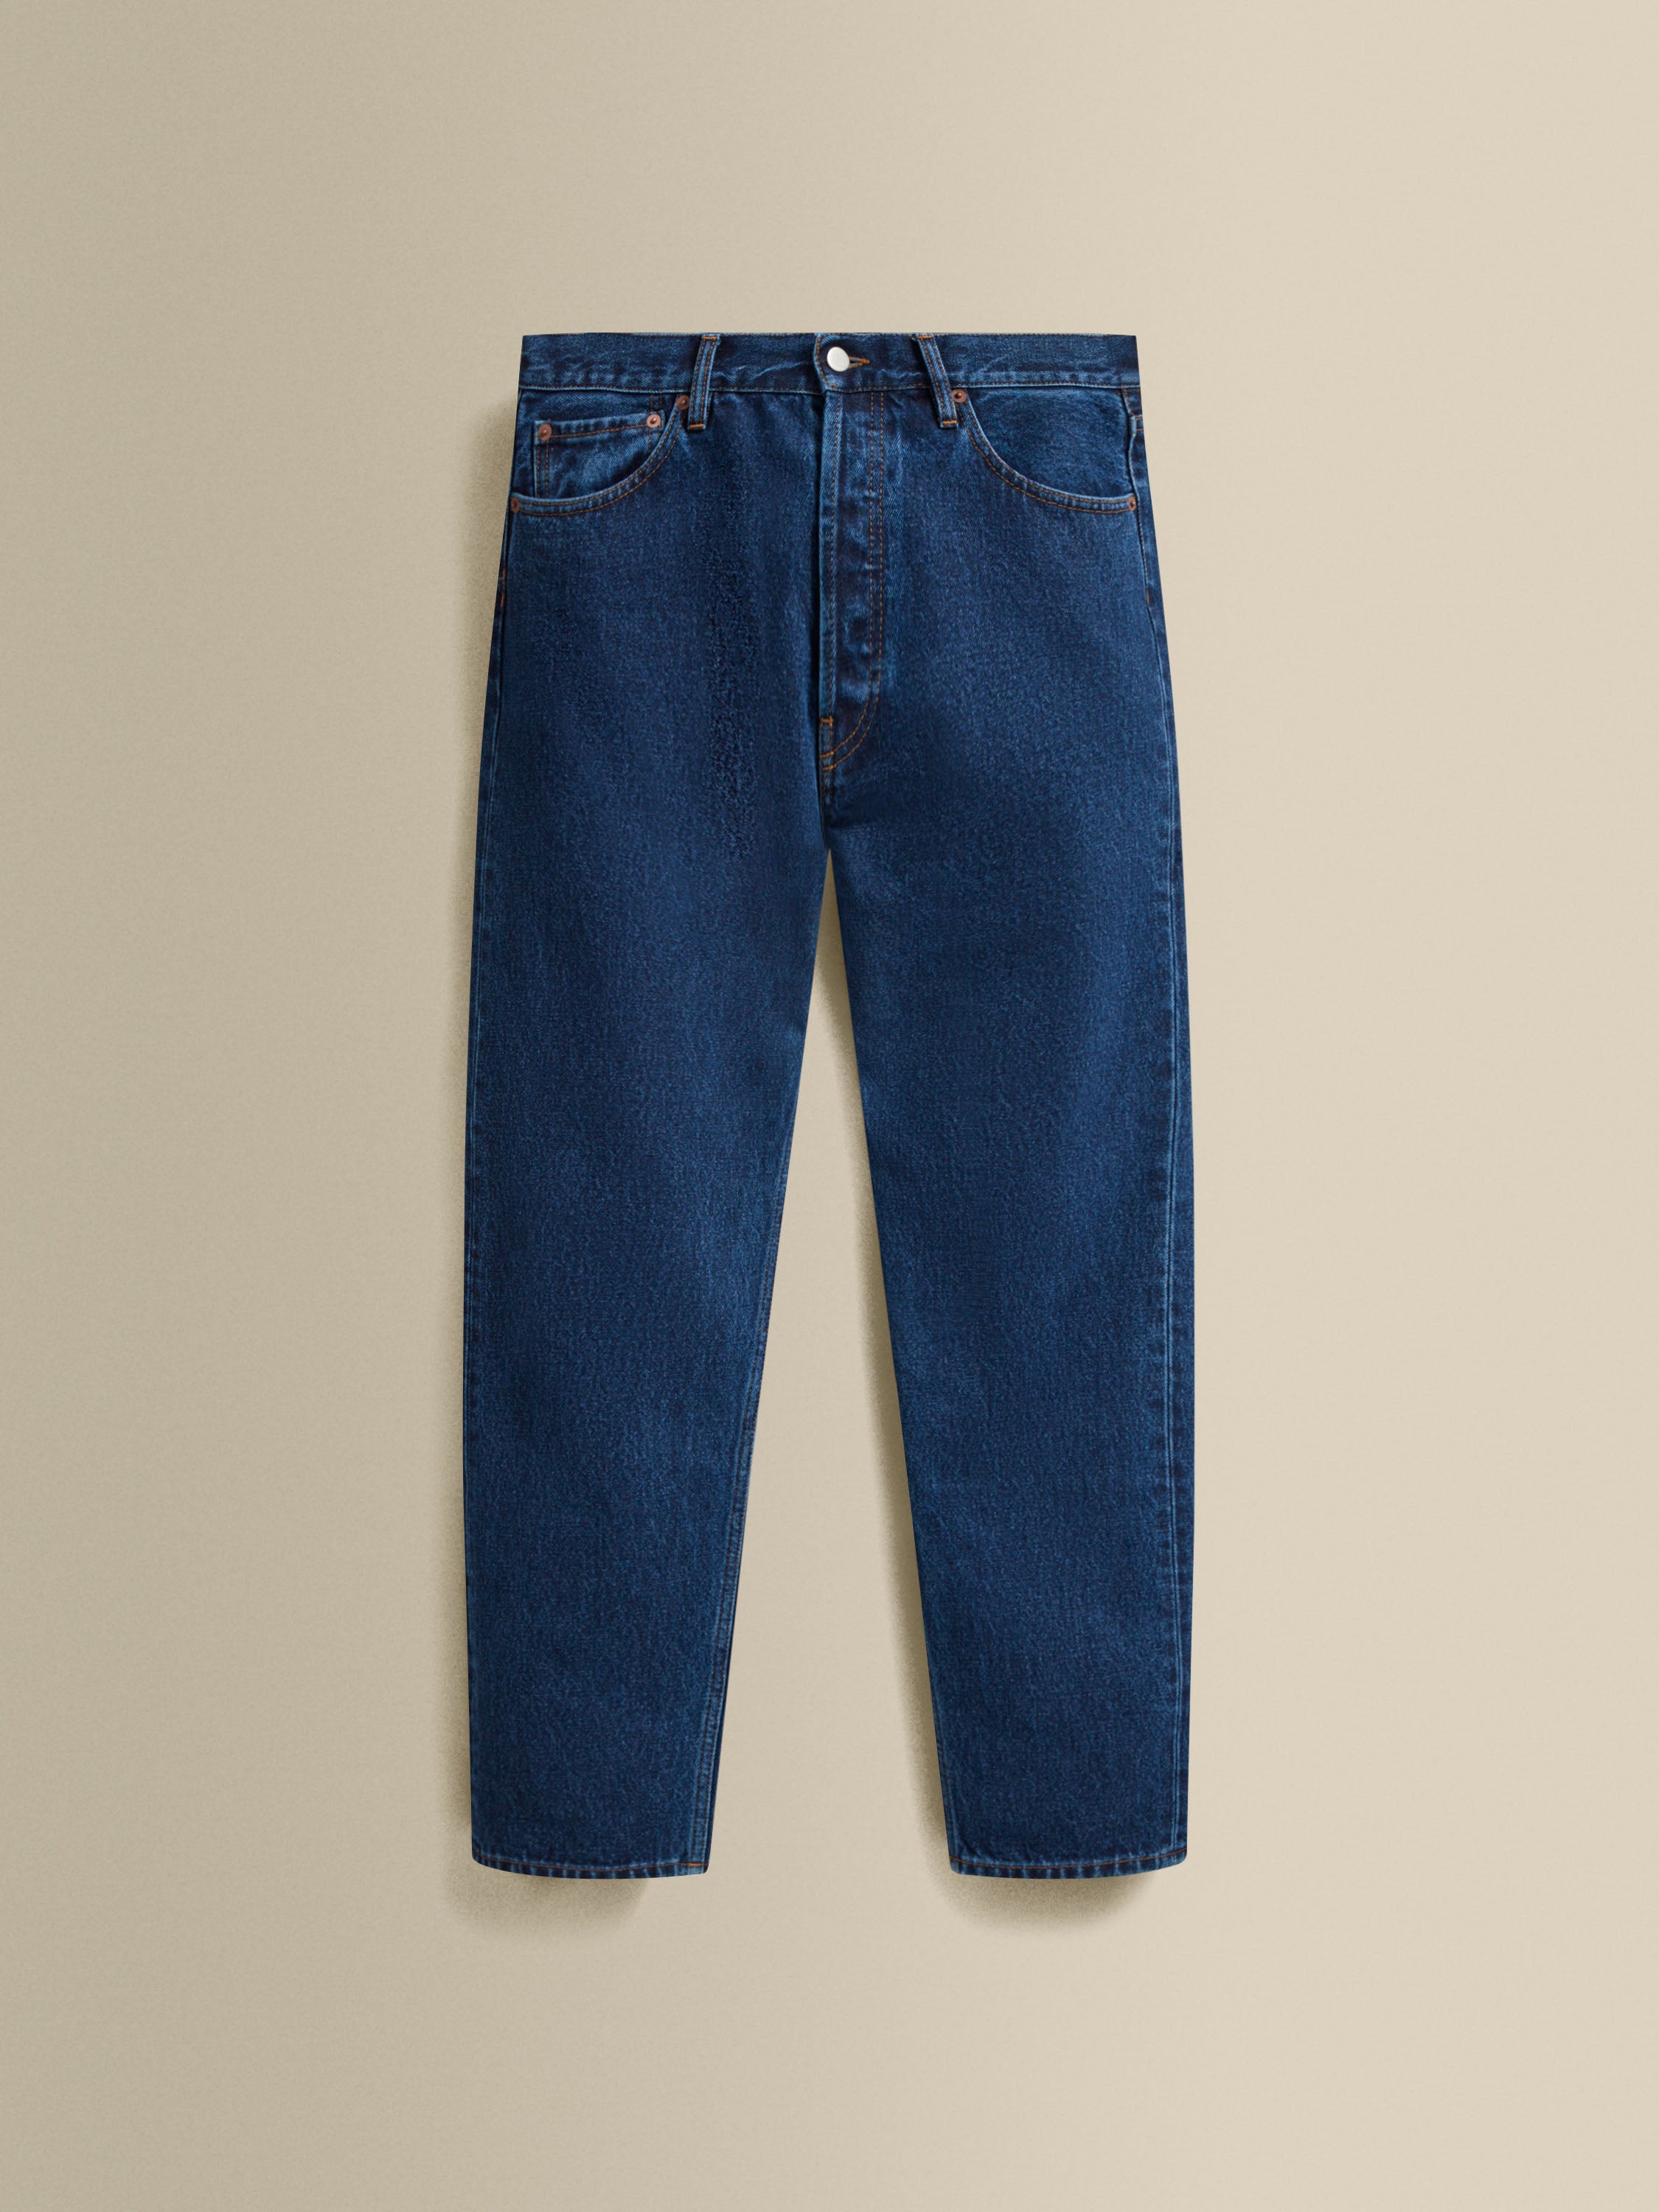 Denim Easy Fit Jeans Dark Wash Product Image